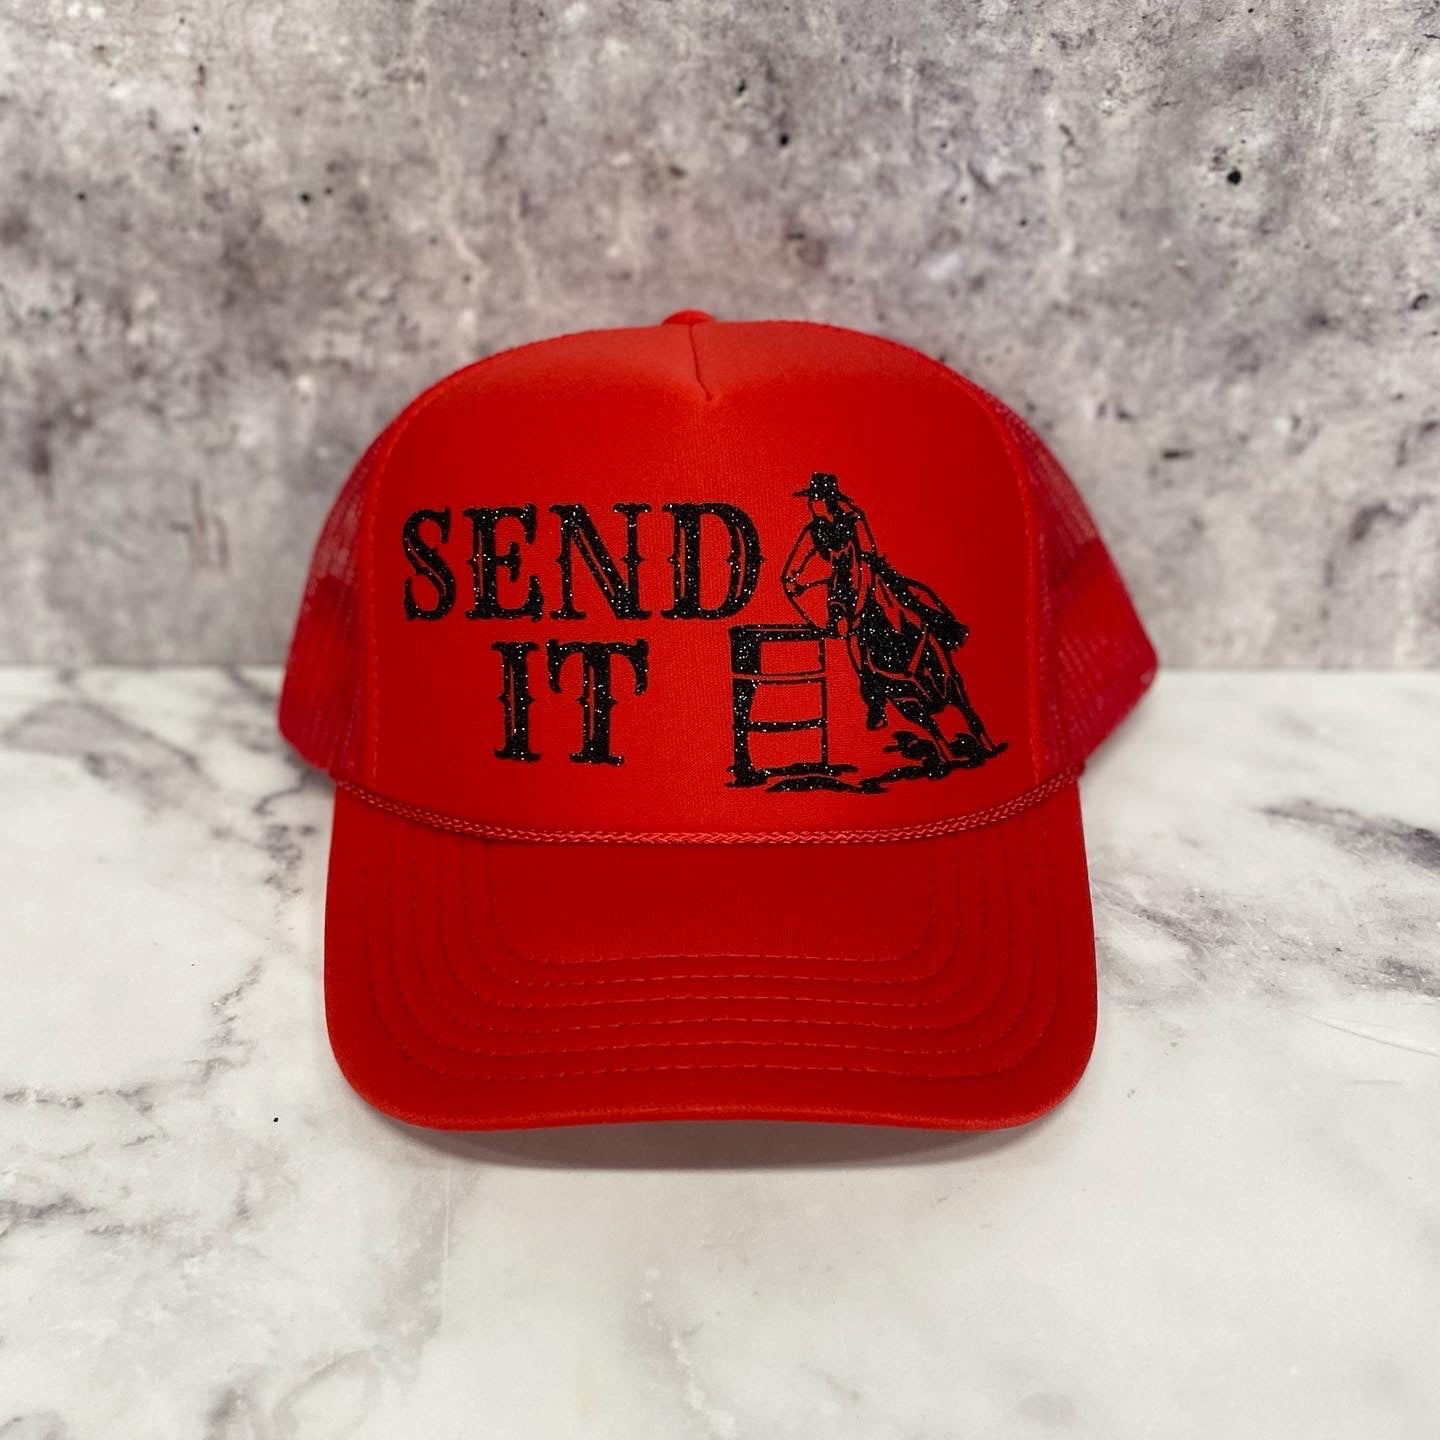 Send It Barrel Racing Trucker Hat